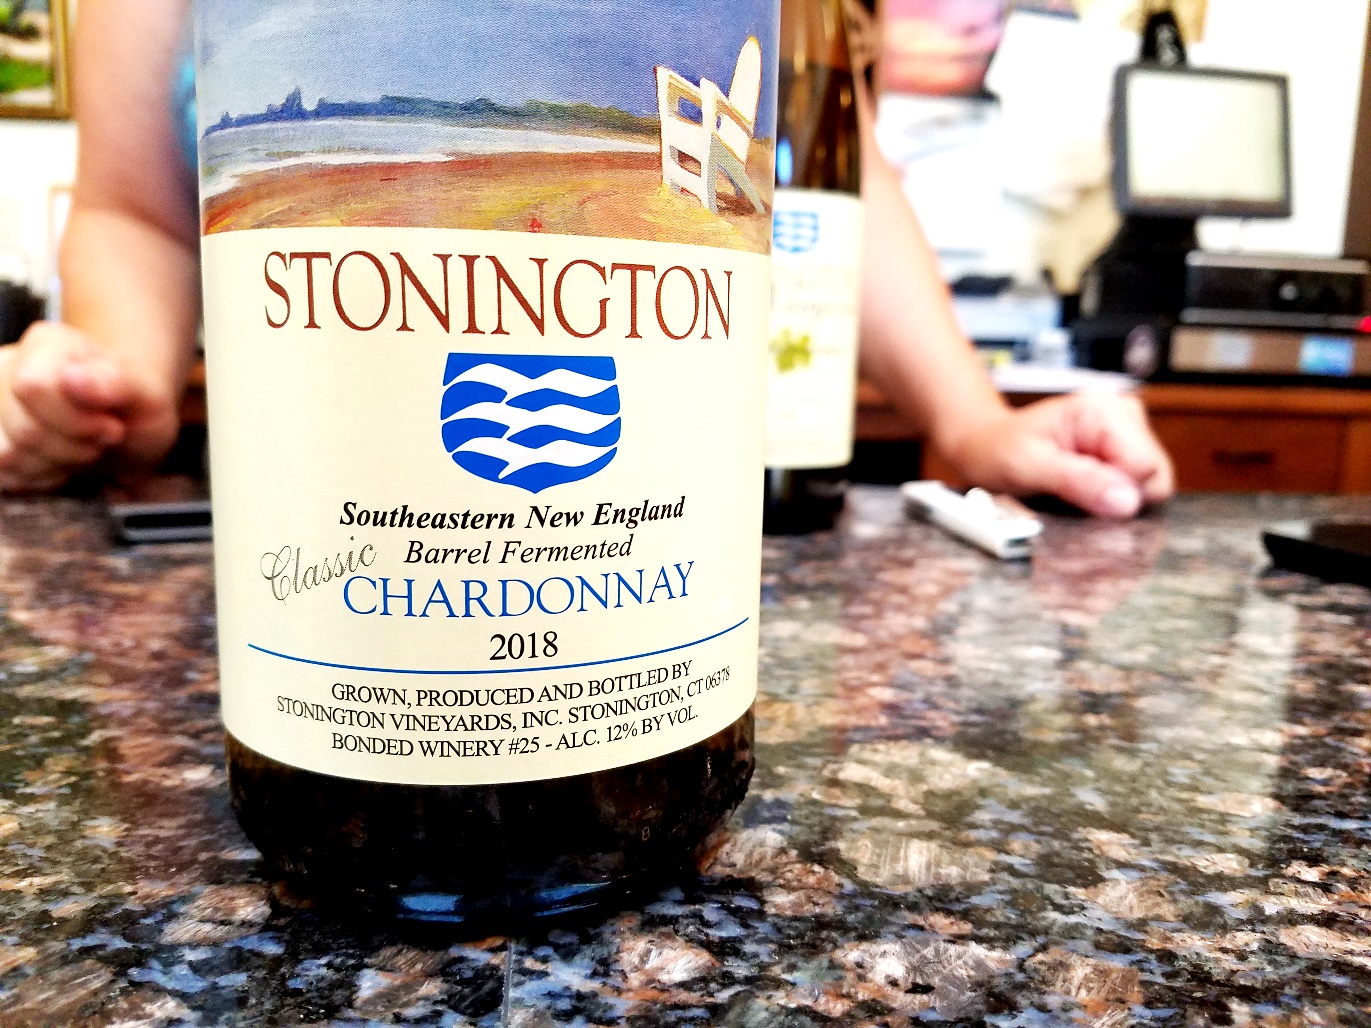 Stonington Vineyards, Classic Barrel Fermented Chardonnay 2018, Southeastern New England, Wine Casual